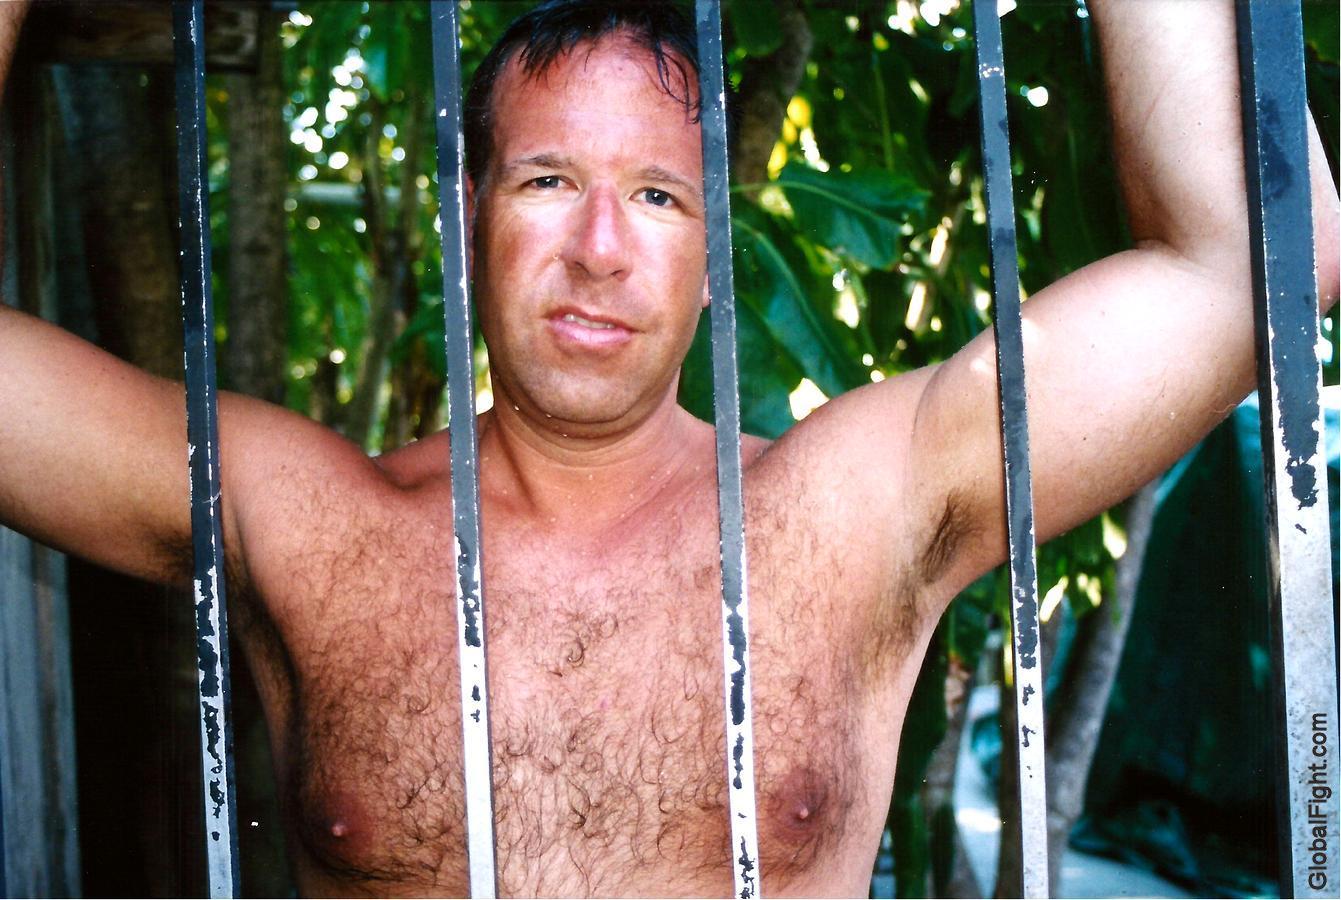 man swimming beach jailed prisoner greek old school wrestling